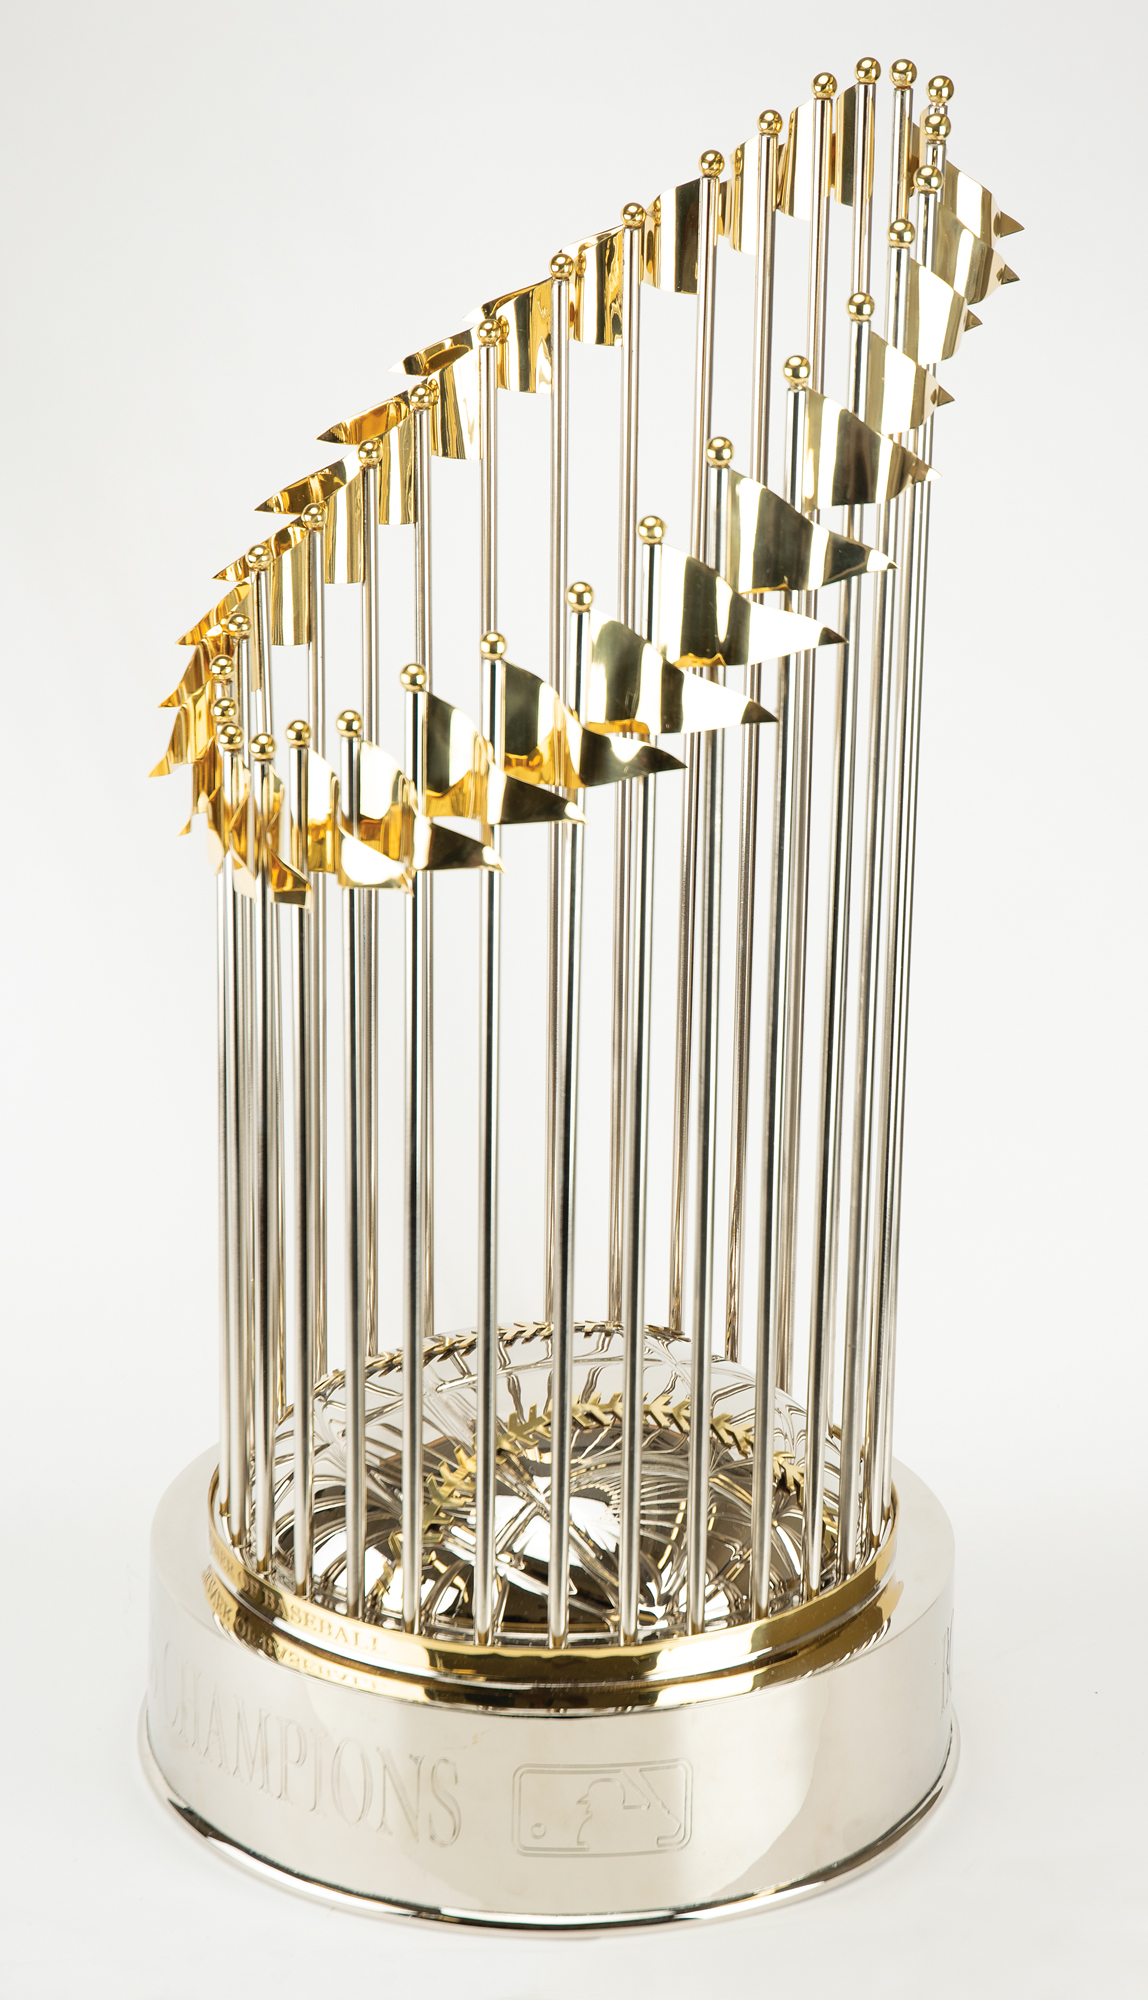 Boston Red Sox 2018 World Series Replica Trophy